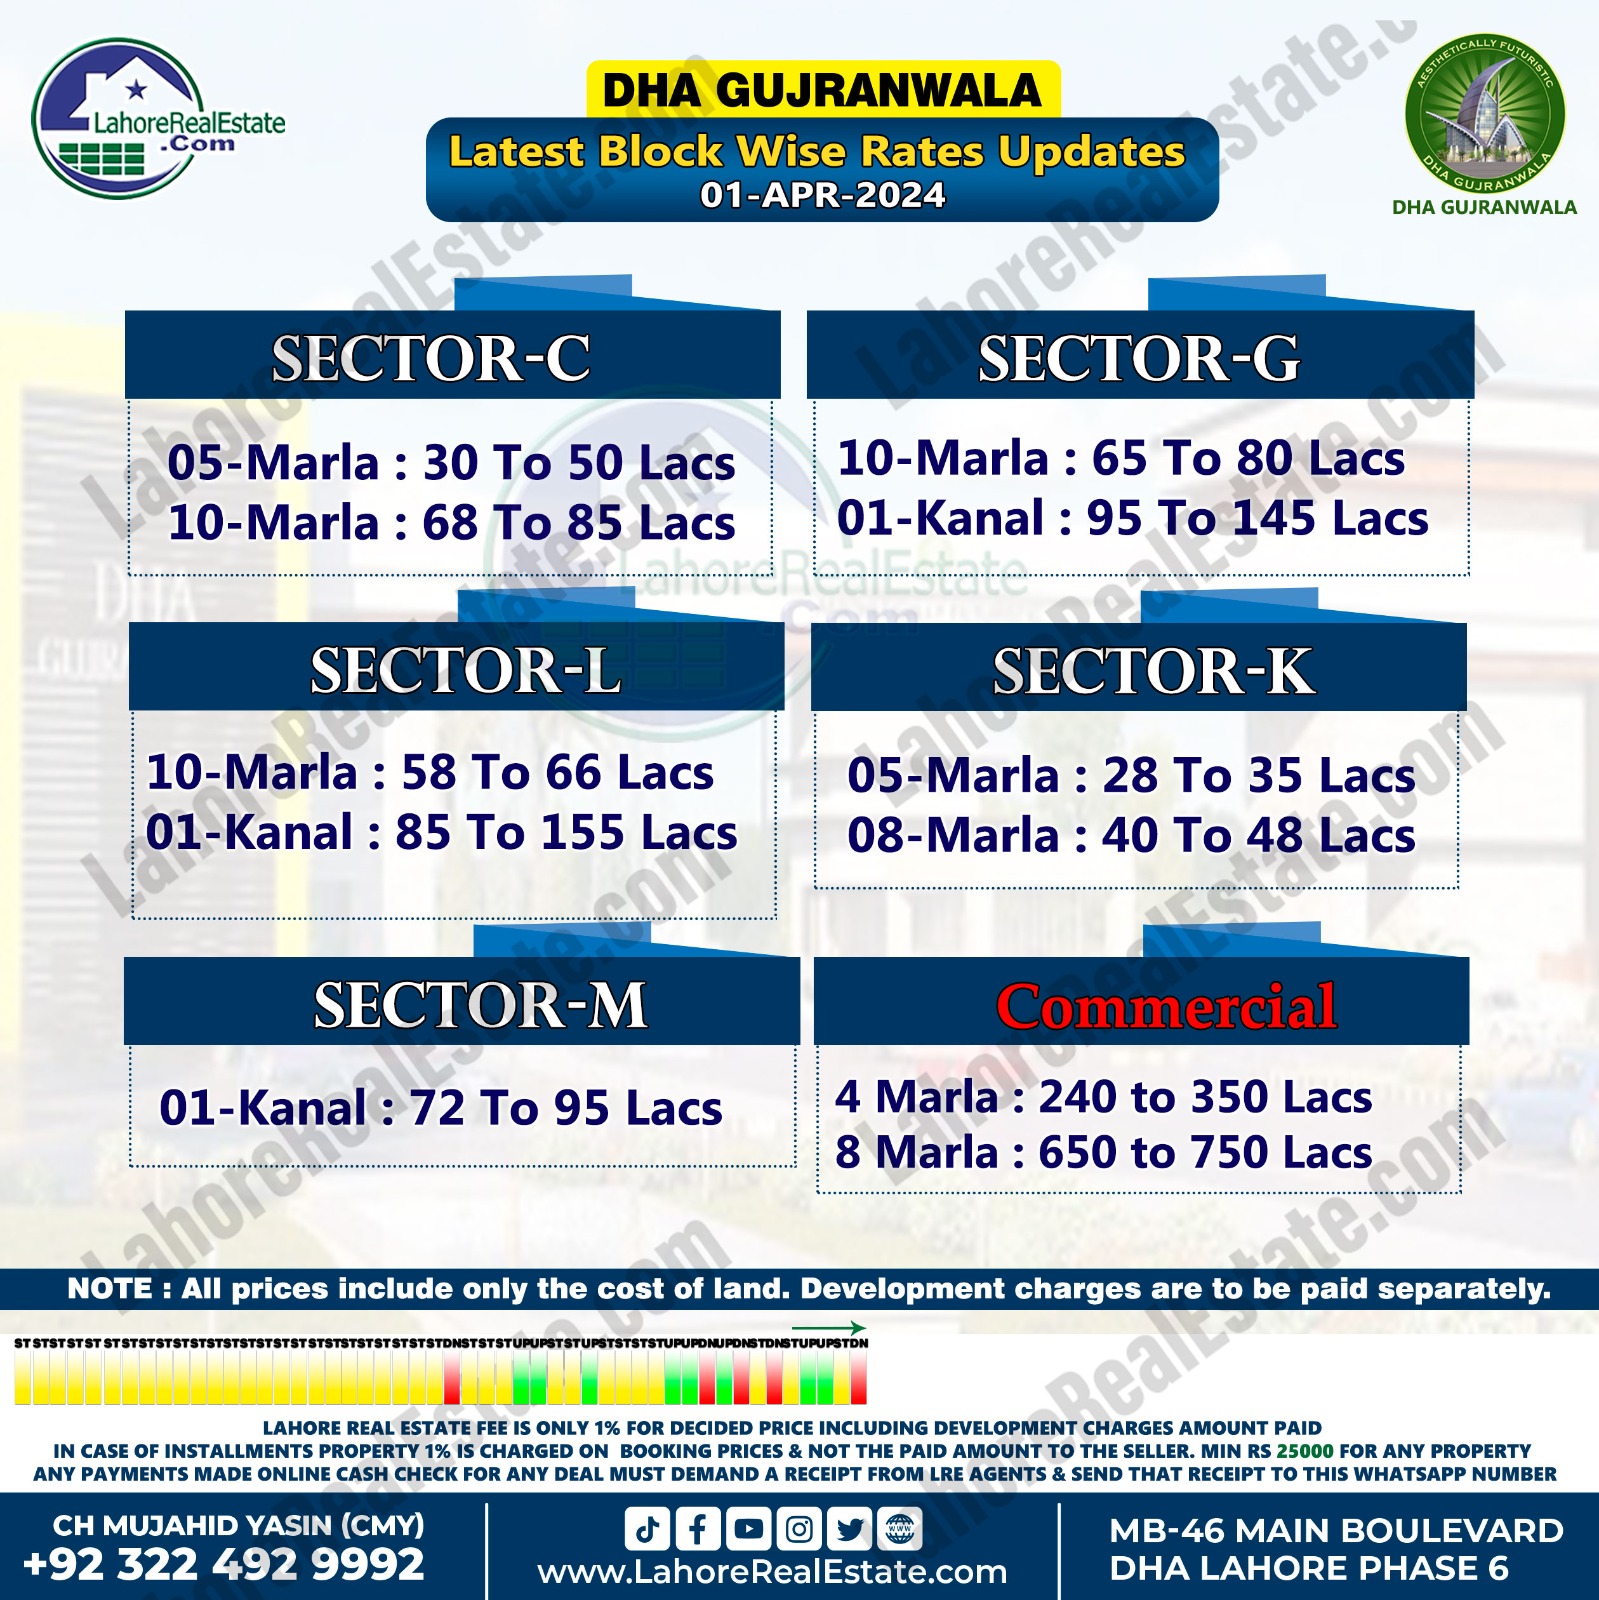 DHA Gujranwala Plot Prices Update April 02, 2024